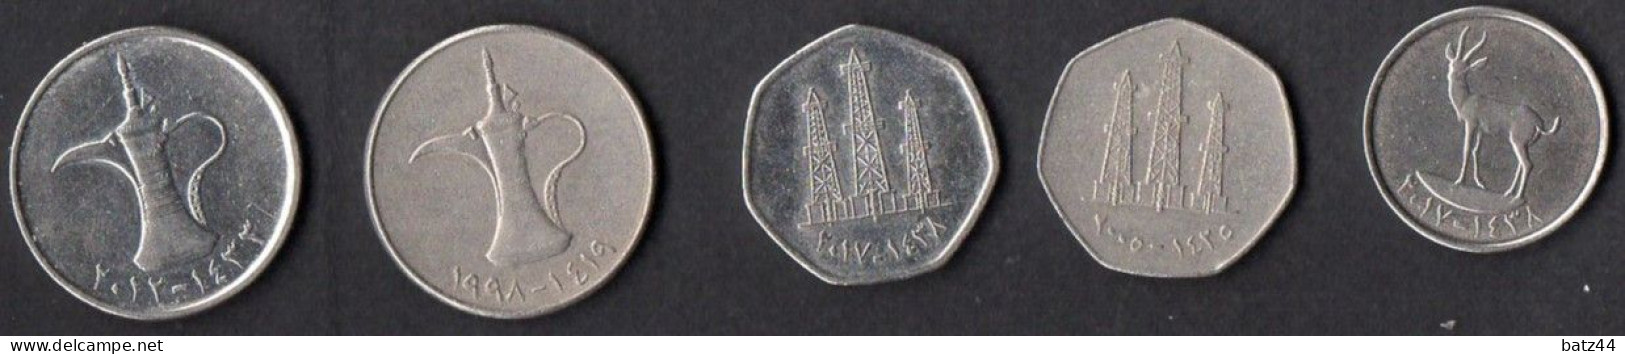 United Arab Emirates Pièces De Monnaie Coins - Ver. Arab. Emirate